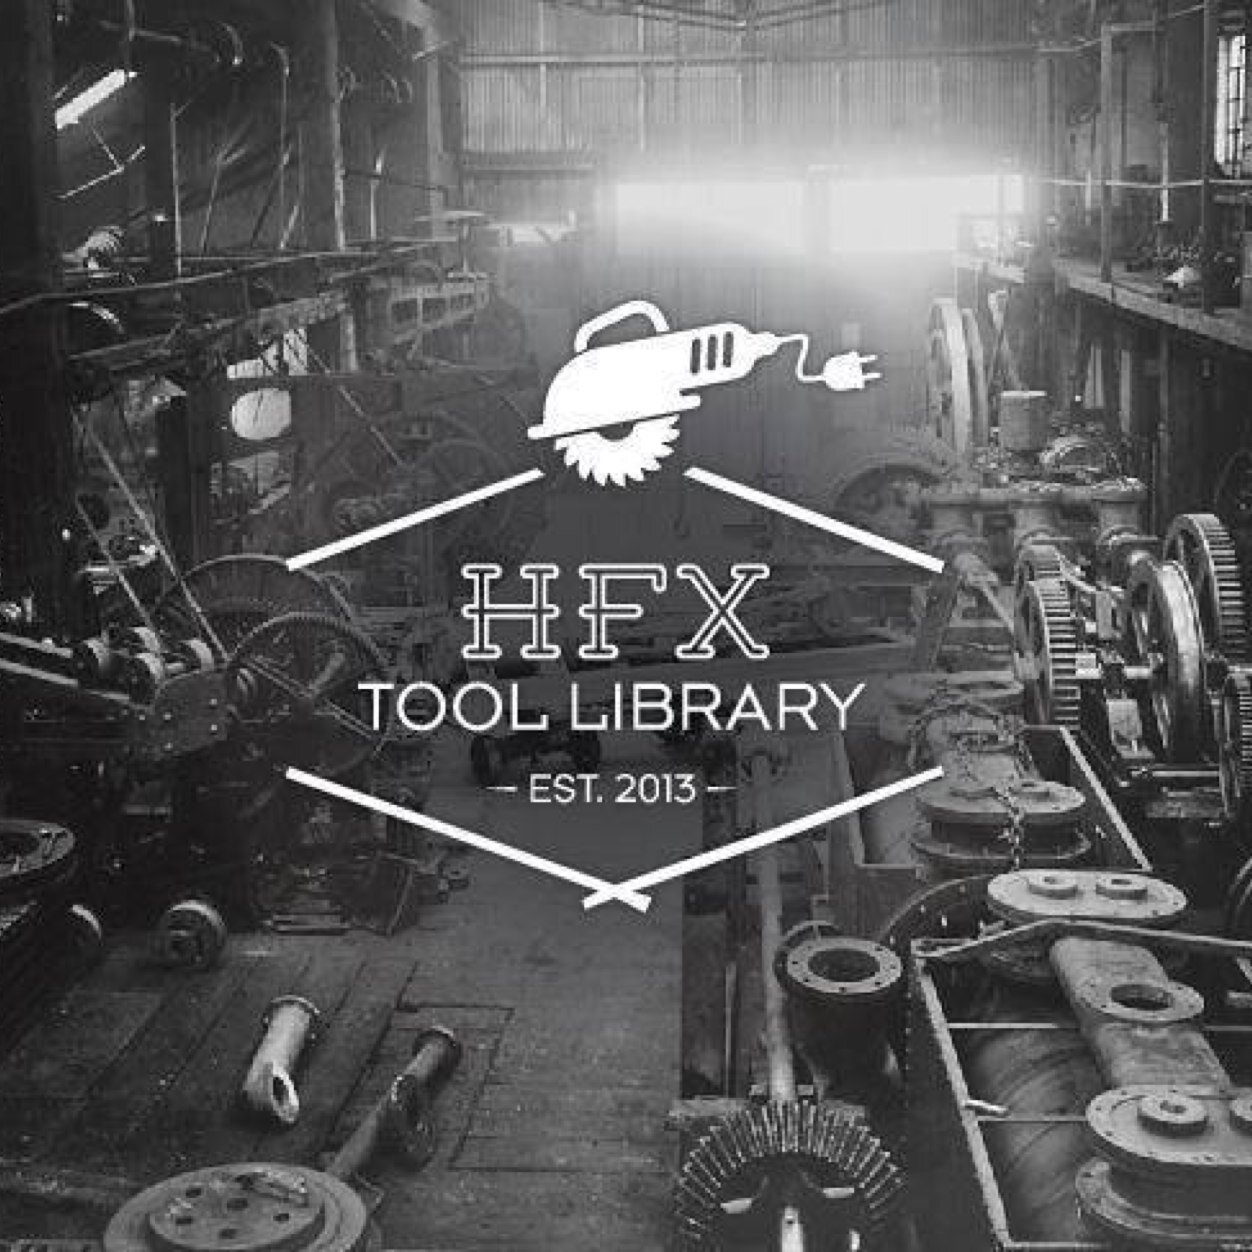 Halifax Tool Library & Workshop